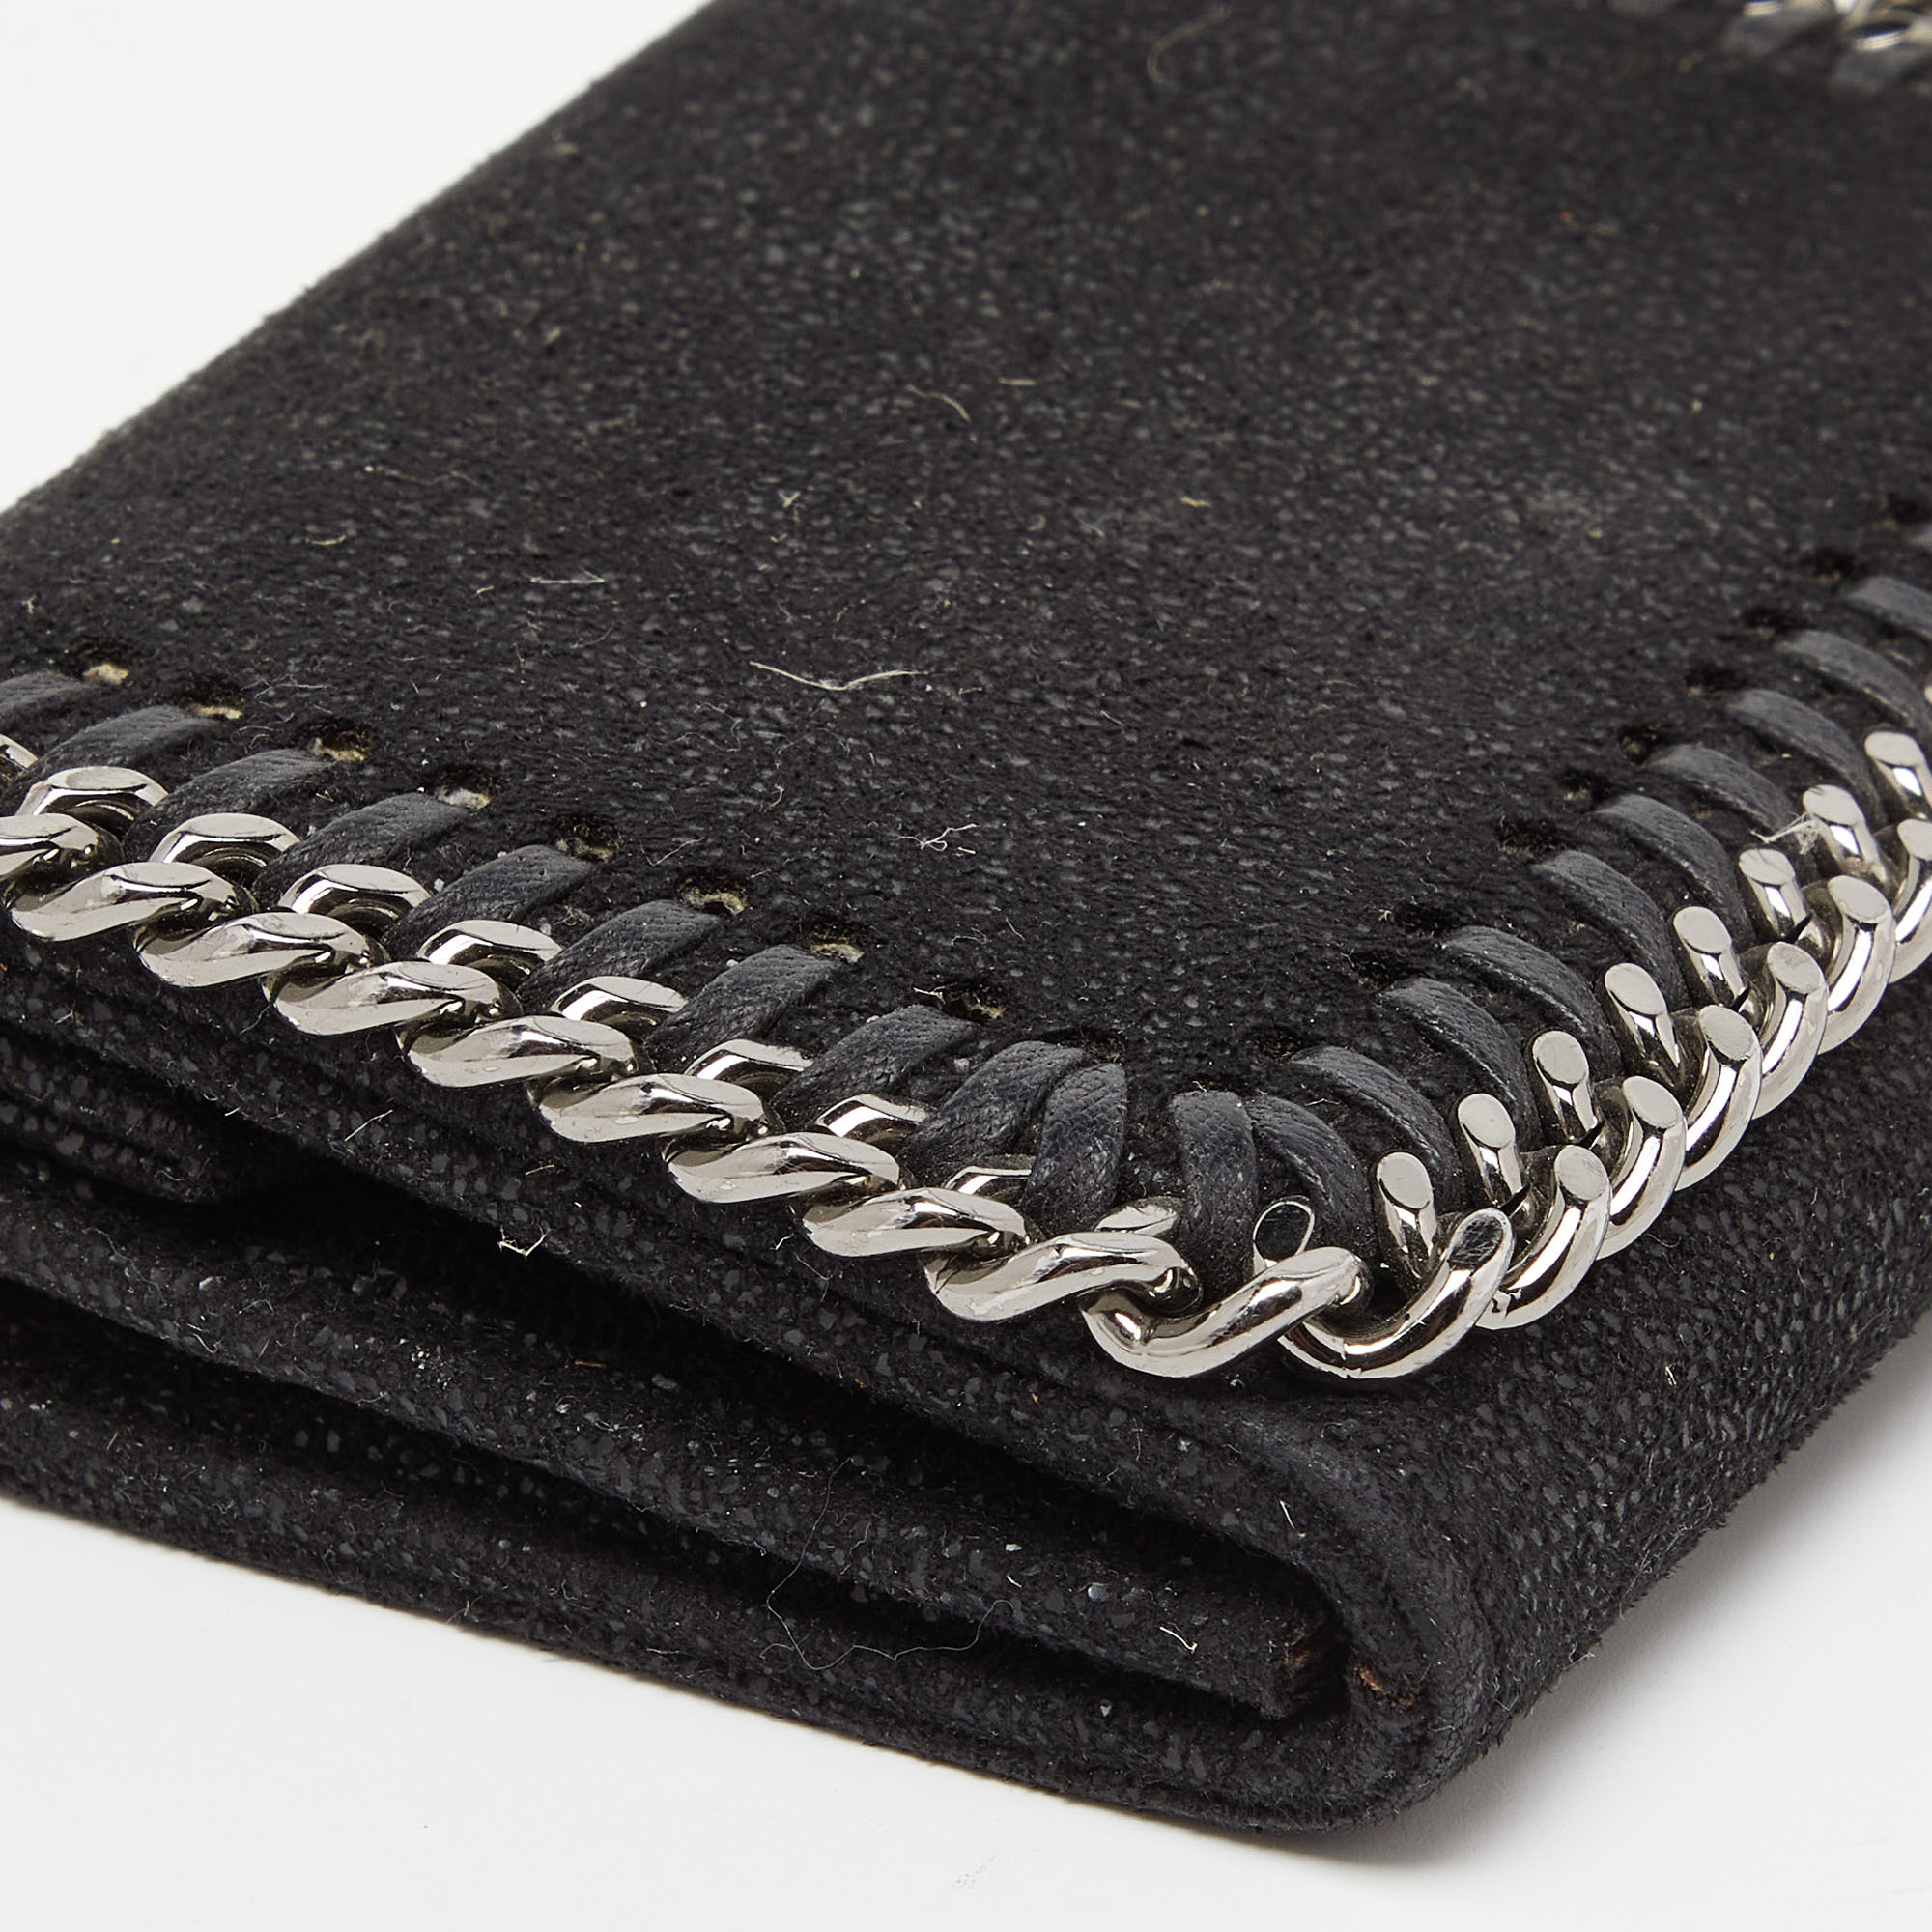 Stella McCartney Black Faux Leather Falabella Trifold Wallet